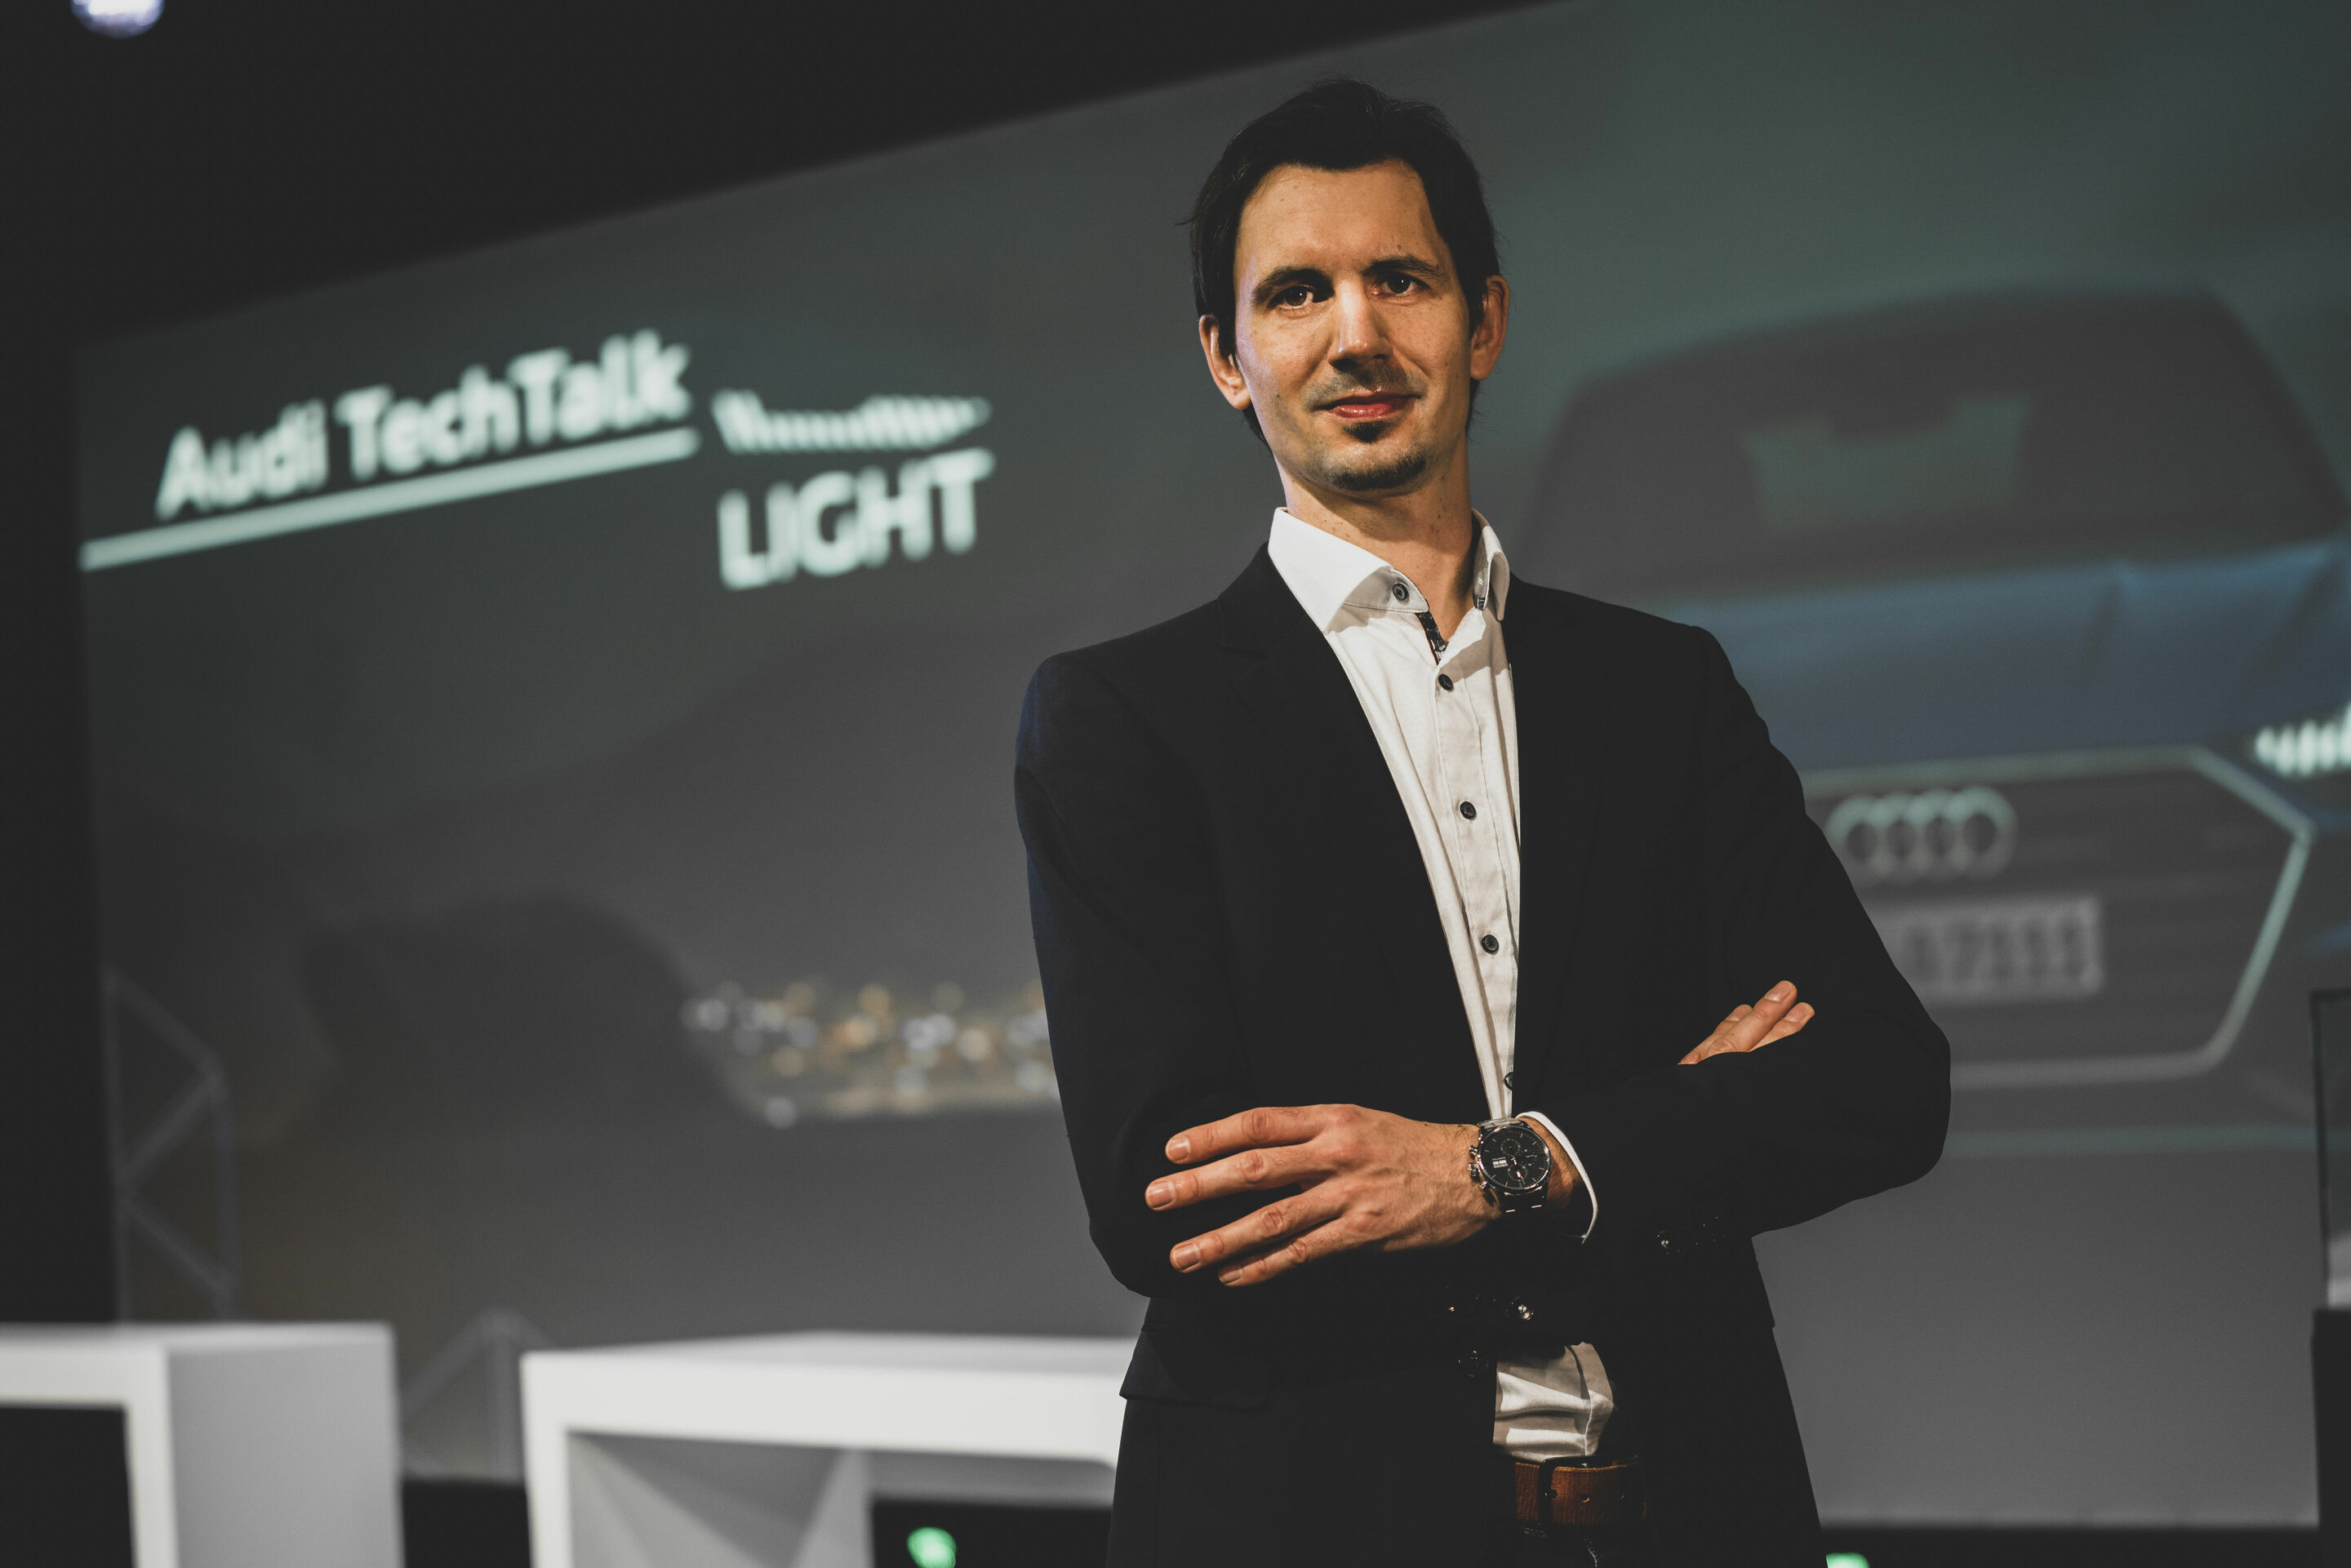 Audi TechTalk: Licht